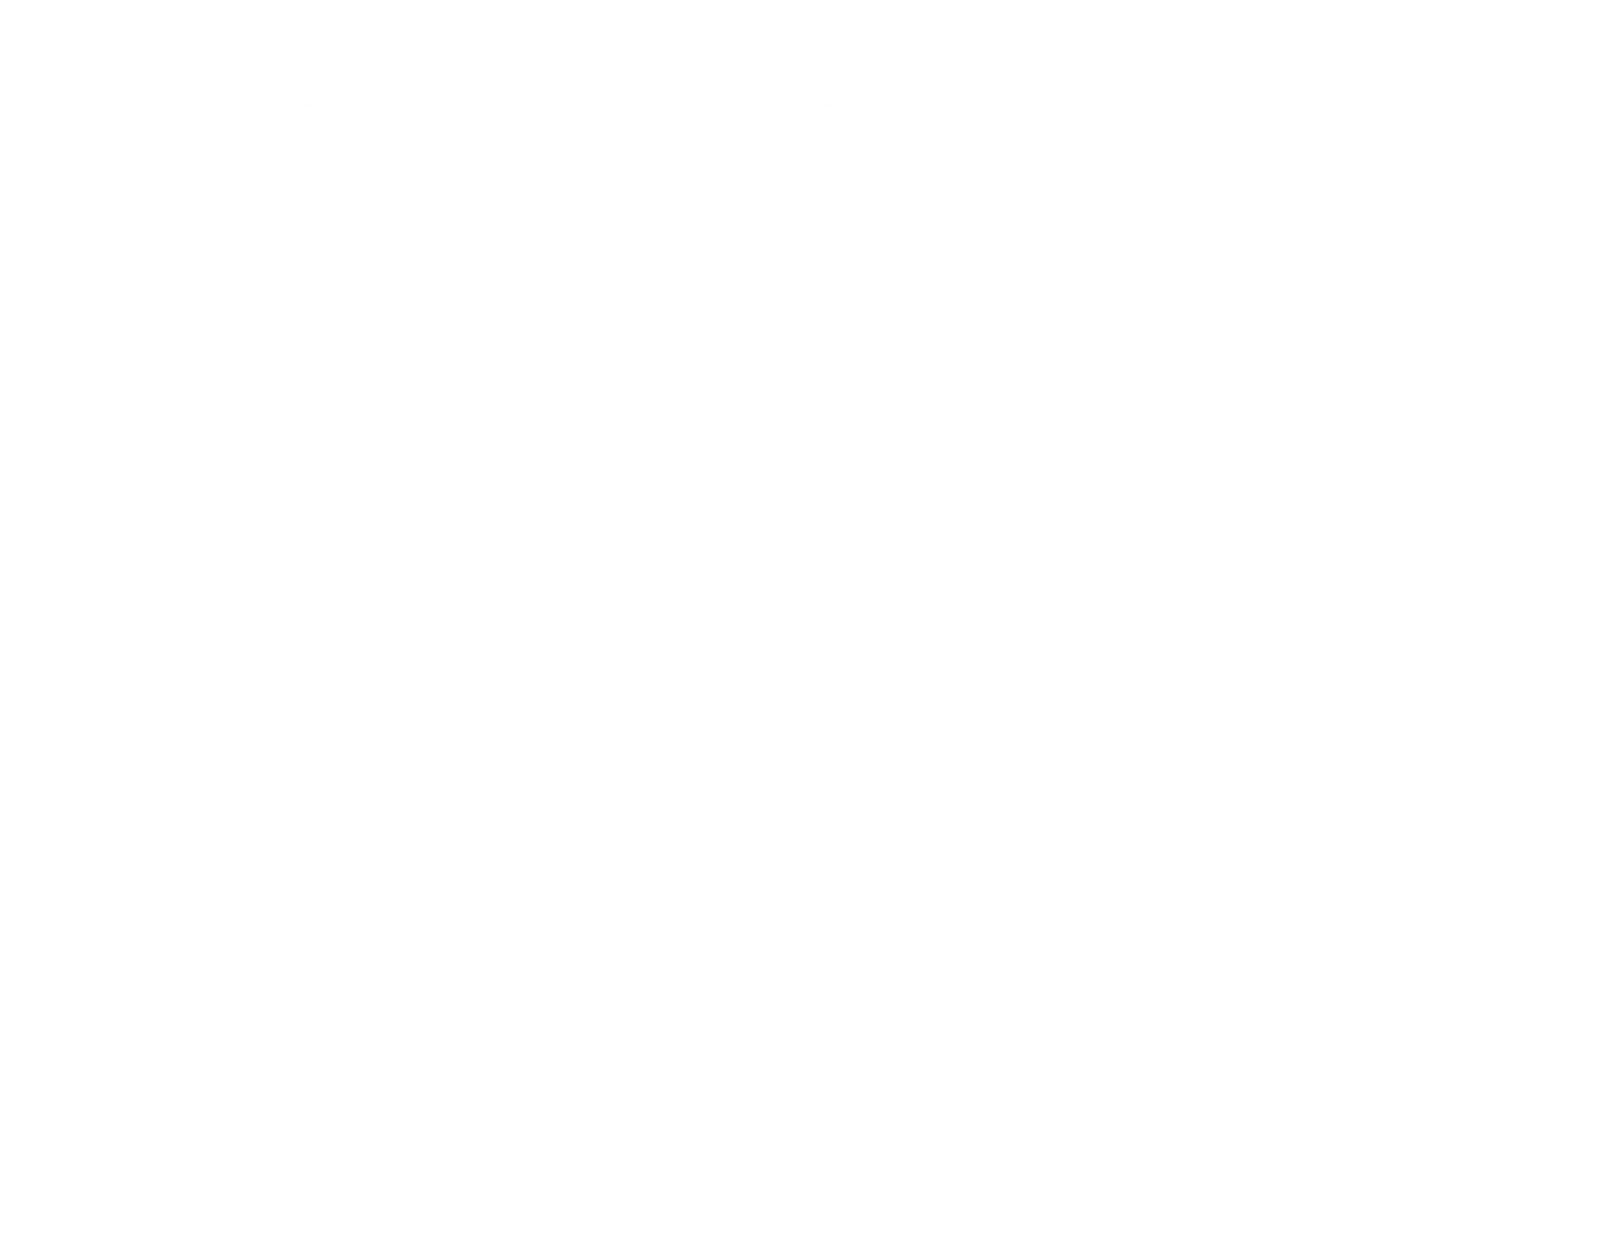 Lilian-Bueno-BRASKEM.png